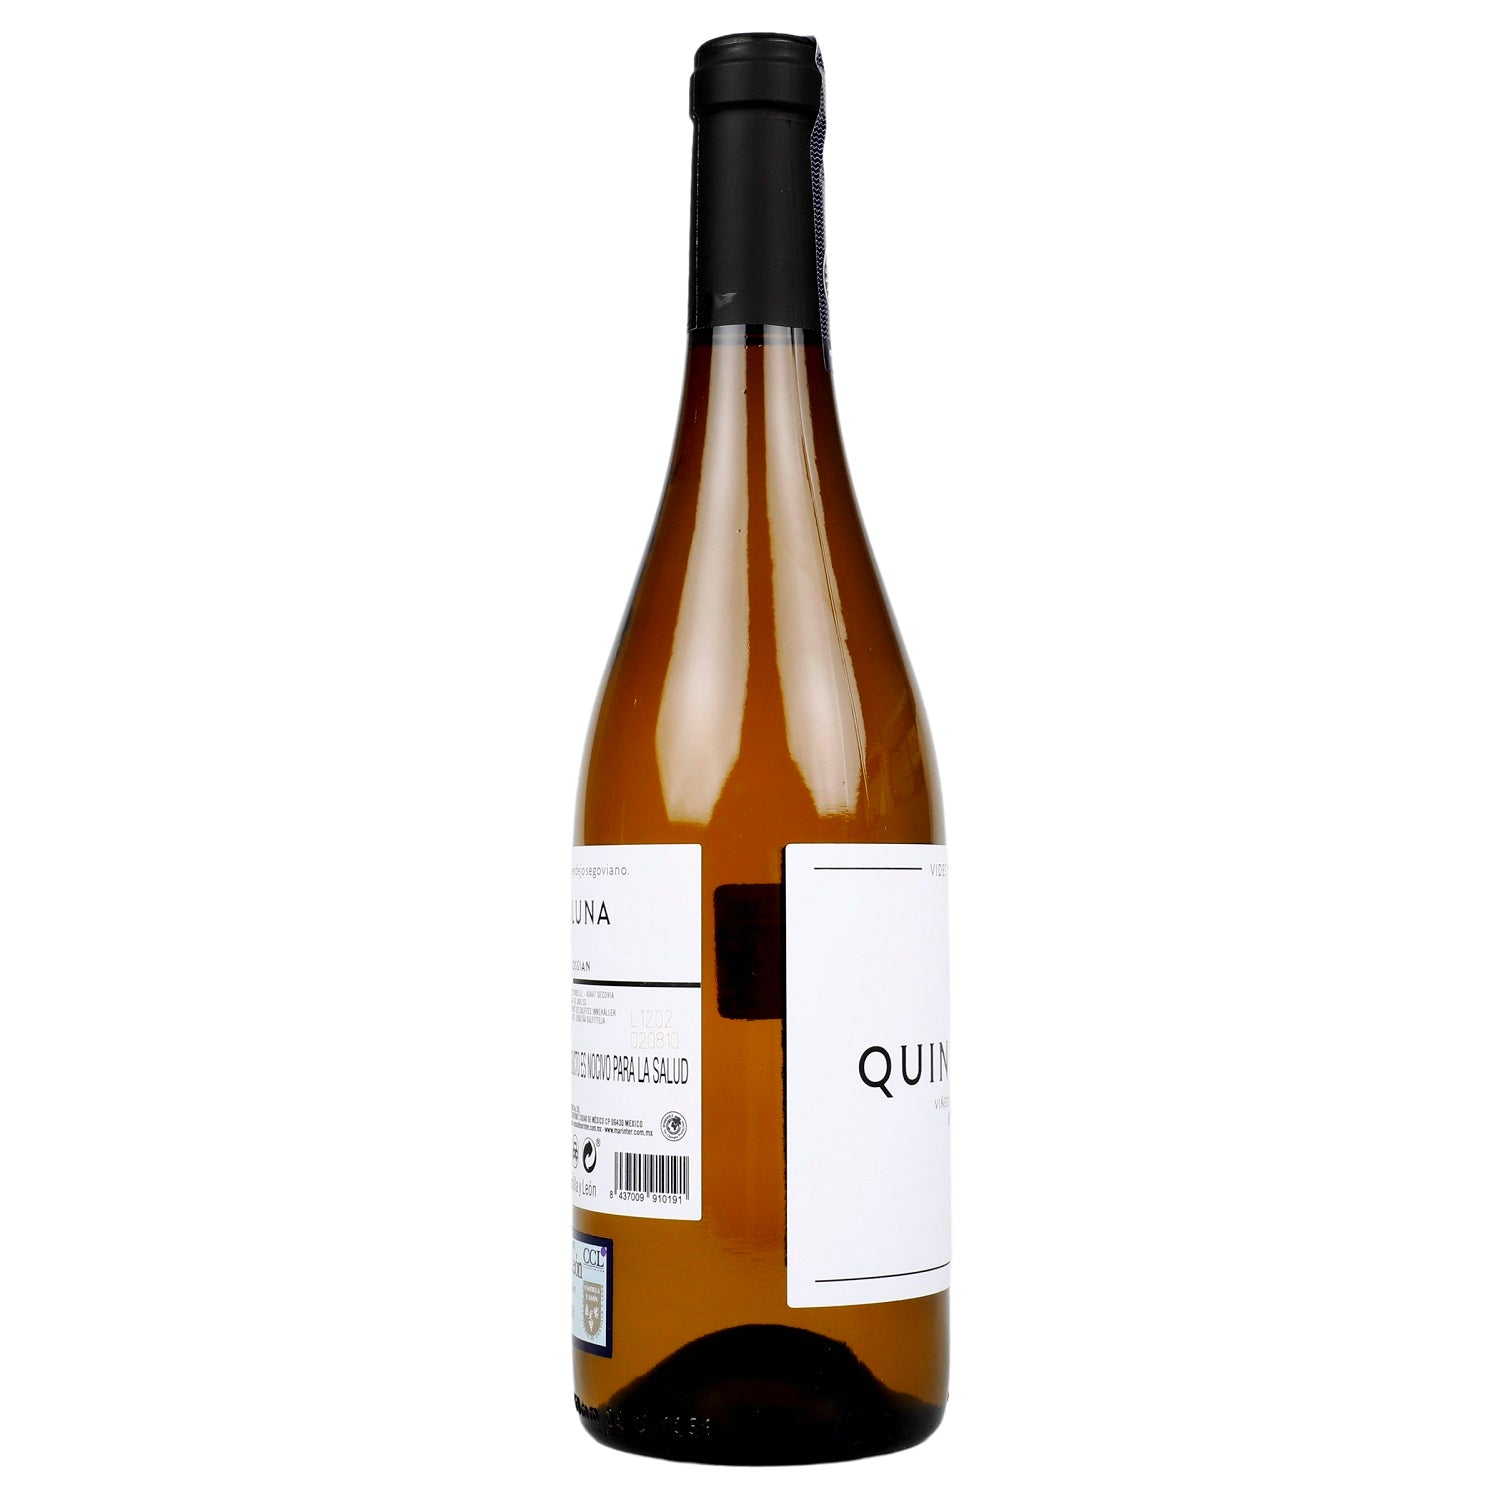 Vino Blanco Quintaluna 2019 de 750 ml